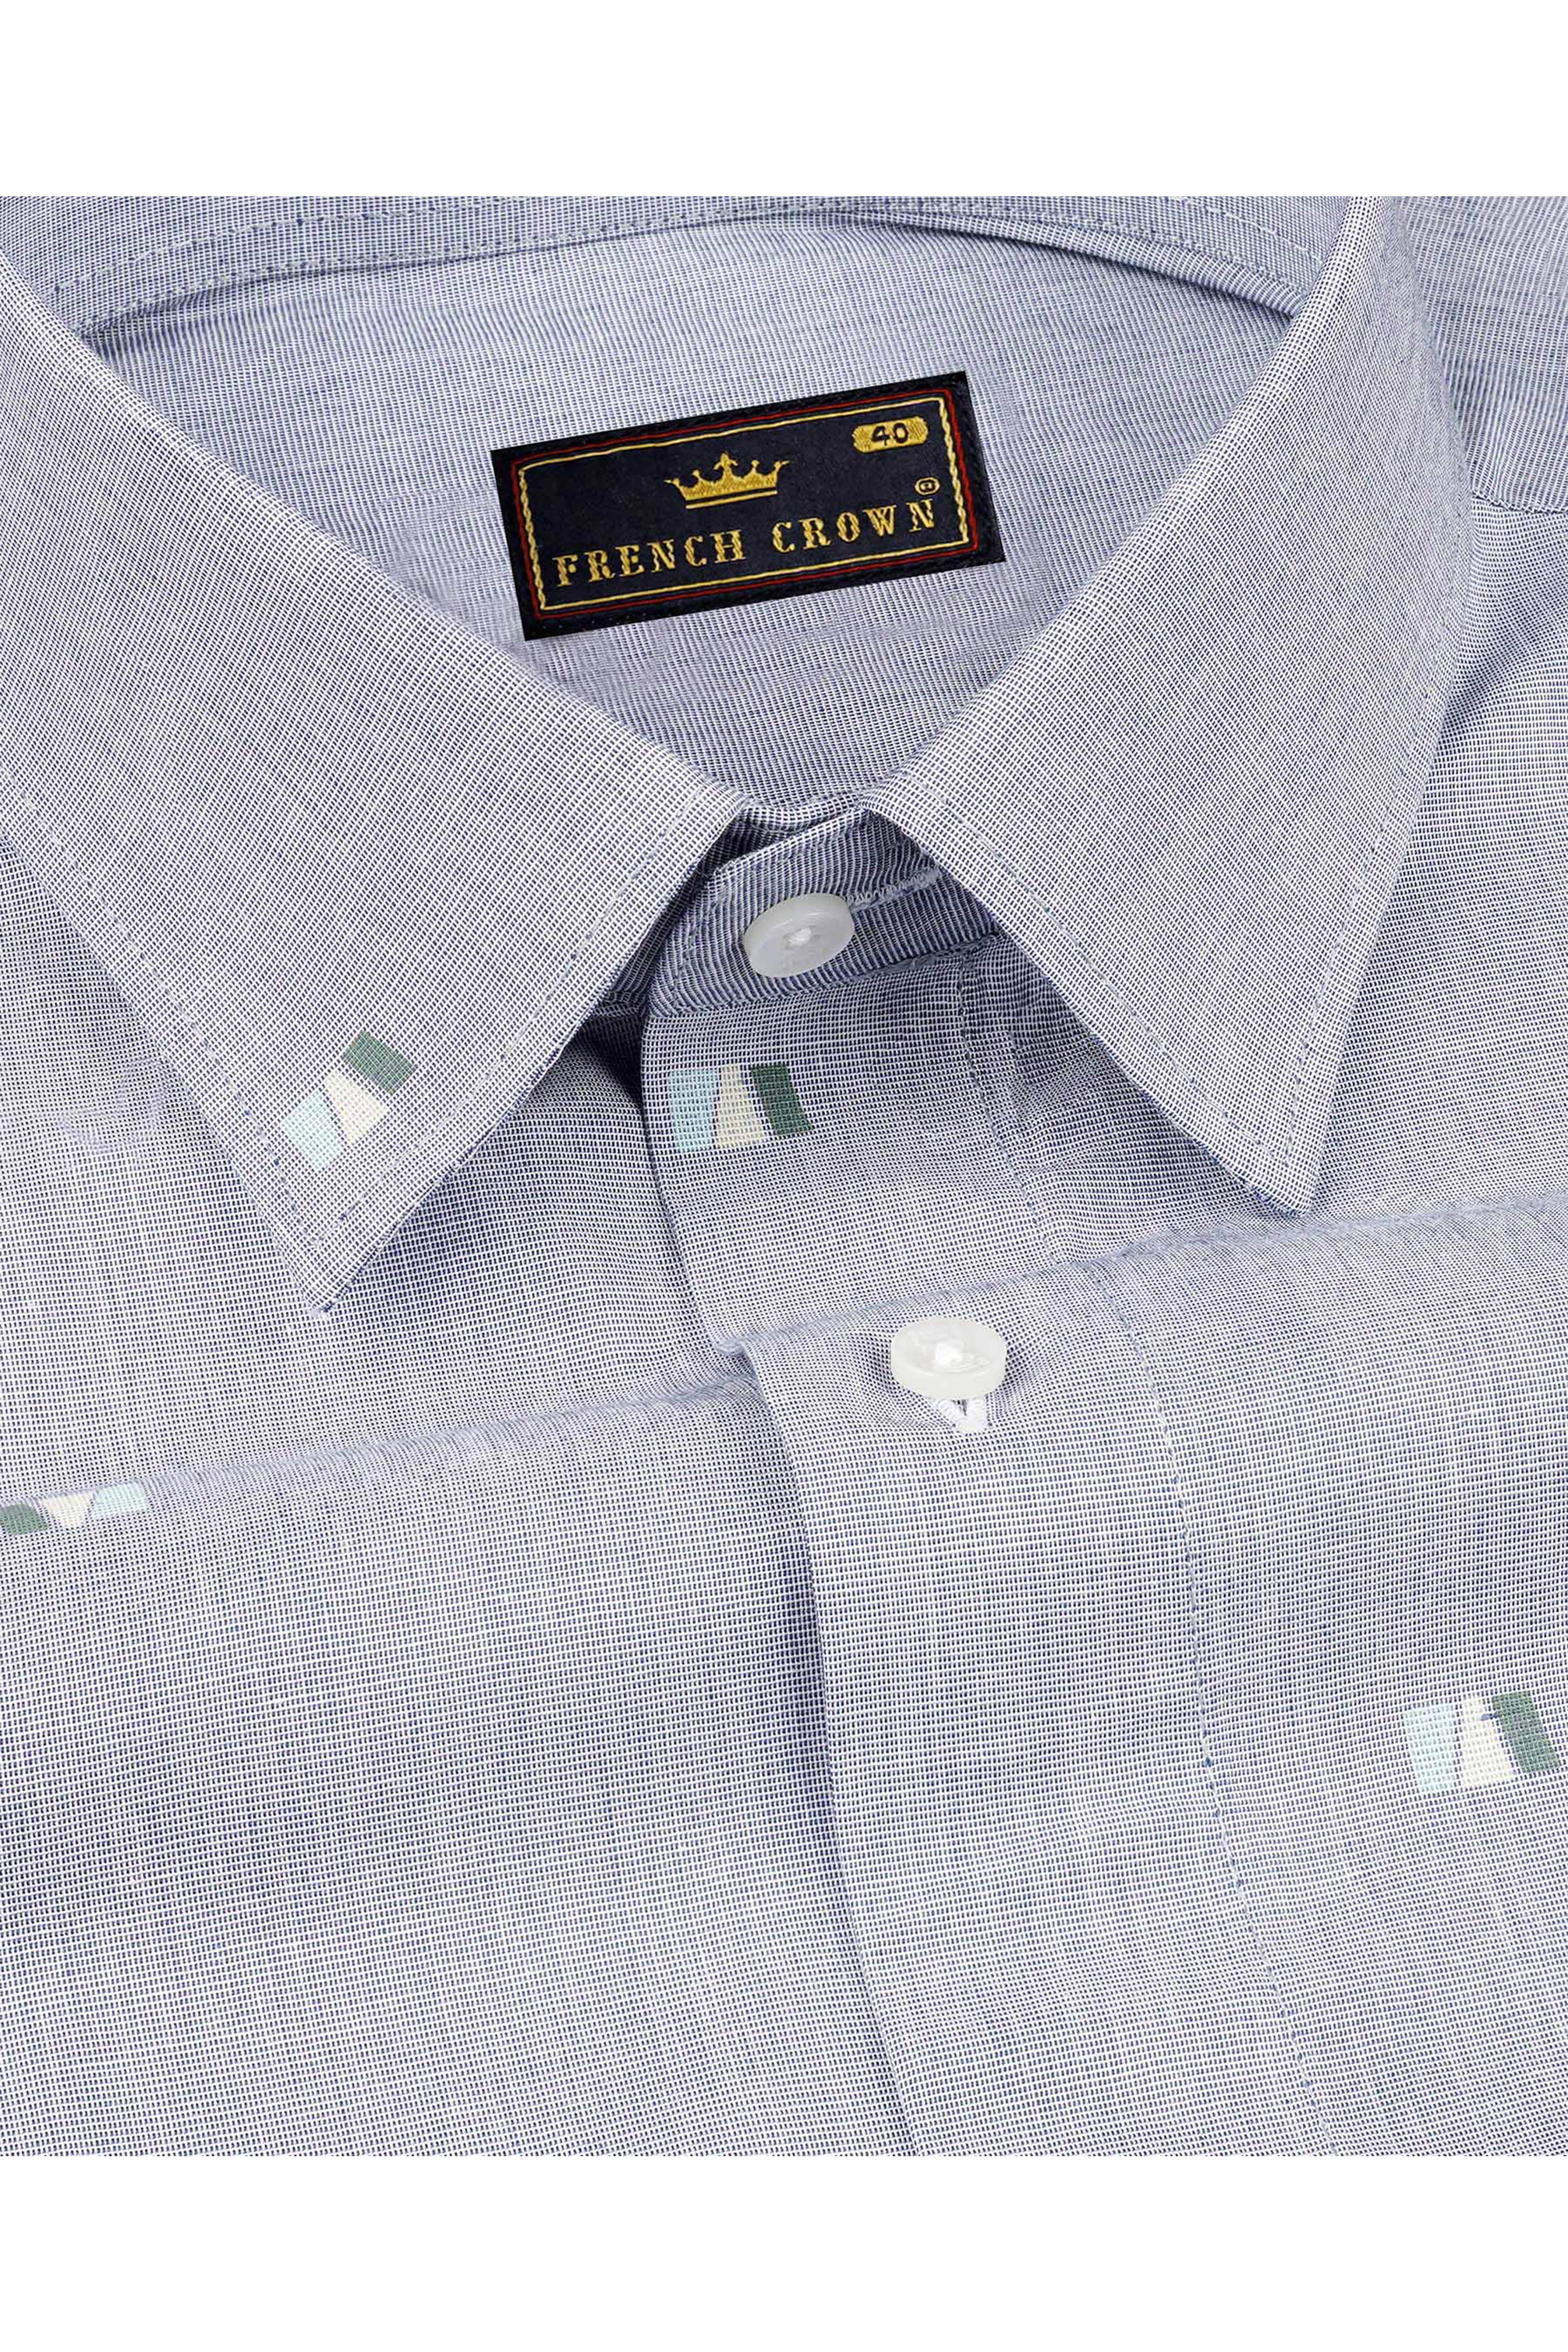 Languid Gray Hand Painted Chambray Designer Shirt